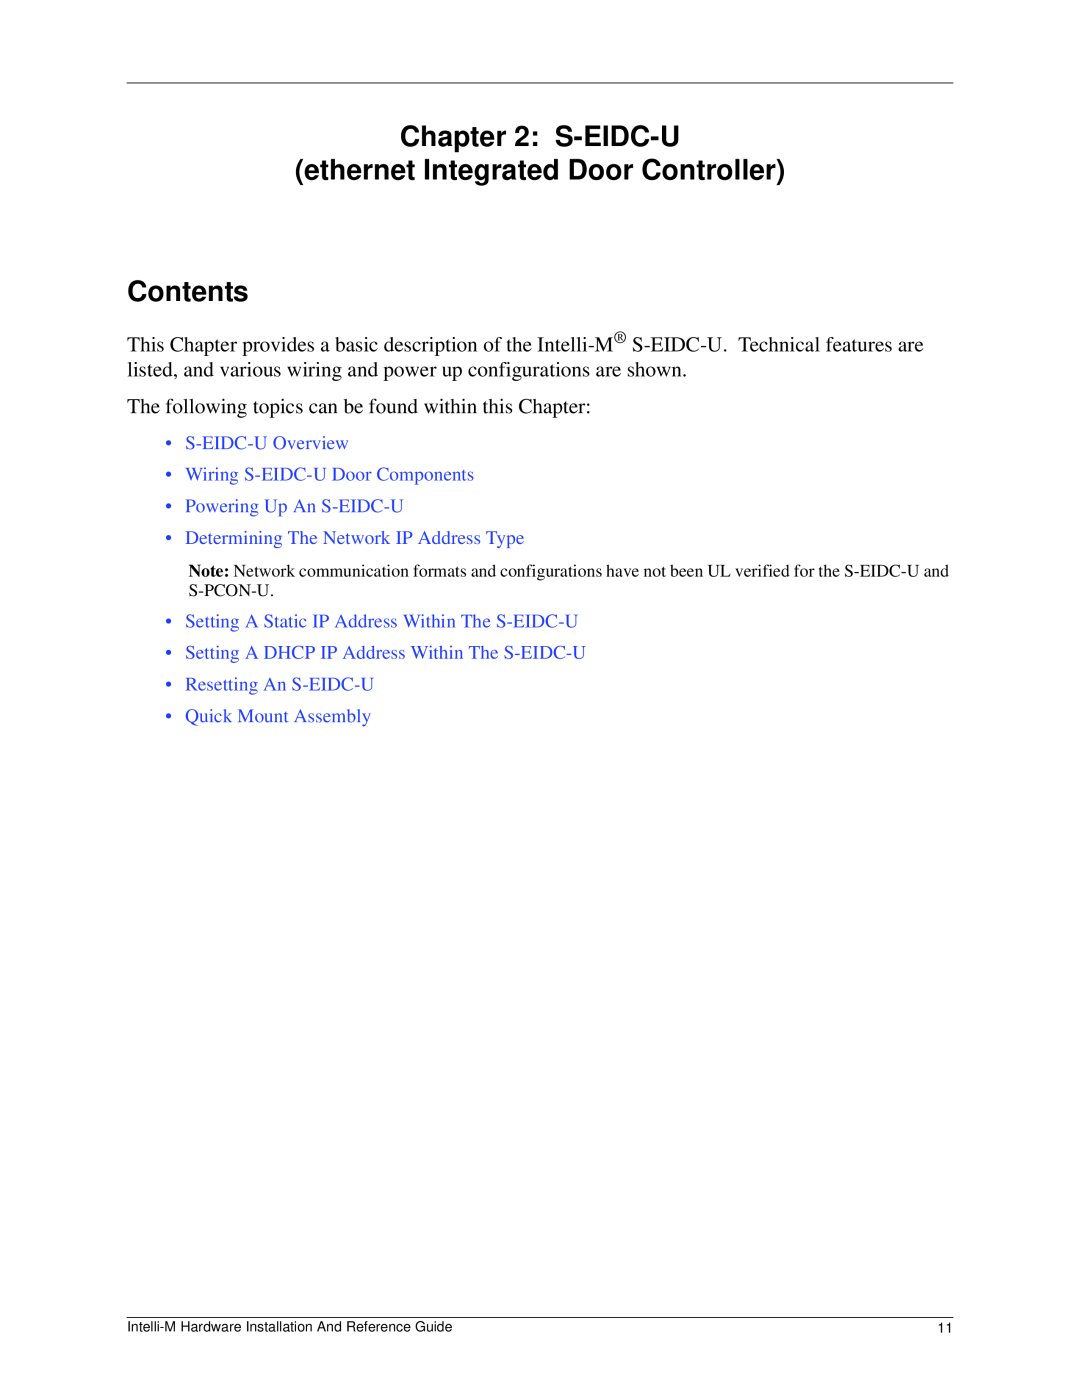 Pelco c3653m-a manual S-Eidc-U, ethernet Integrated Door Controller Contents 